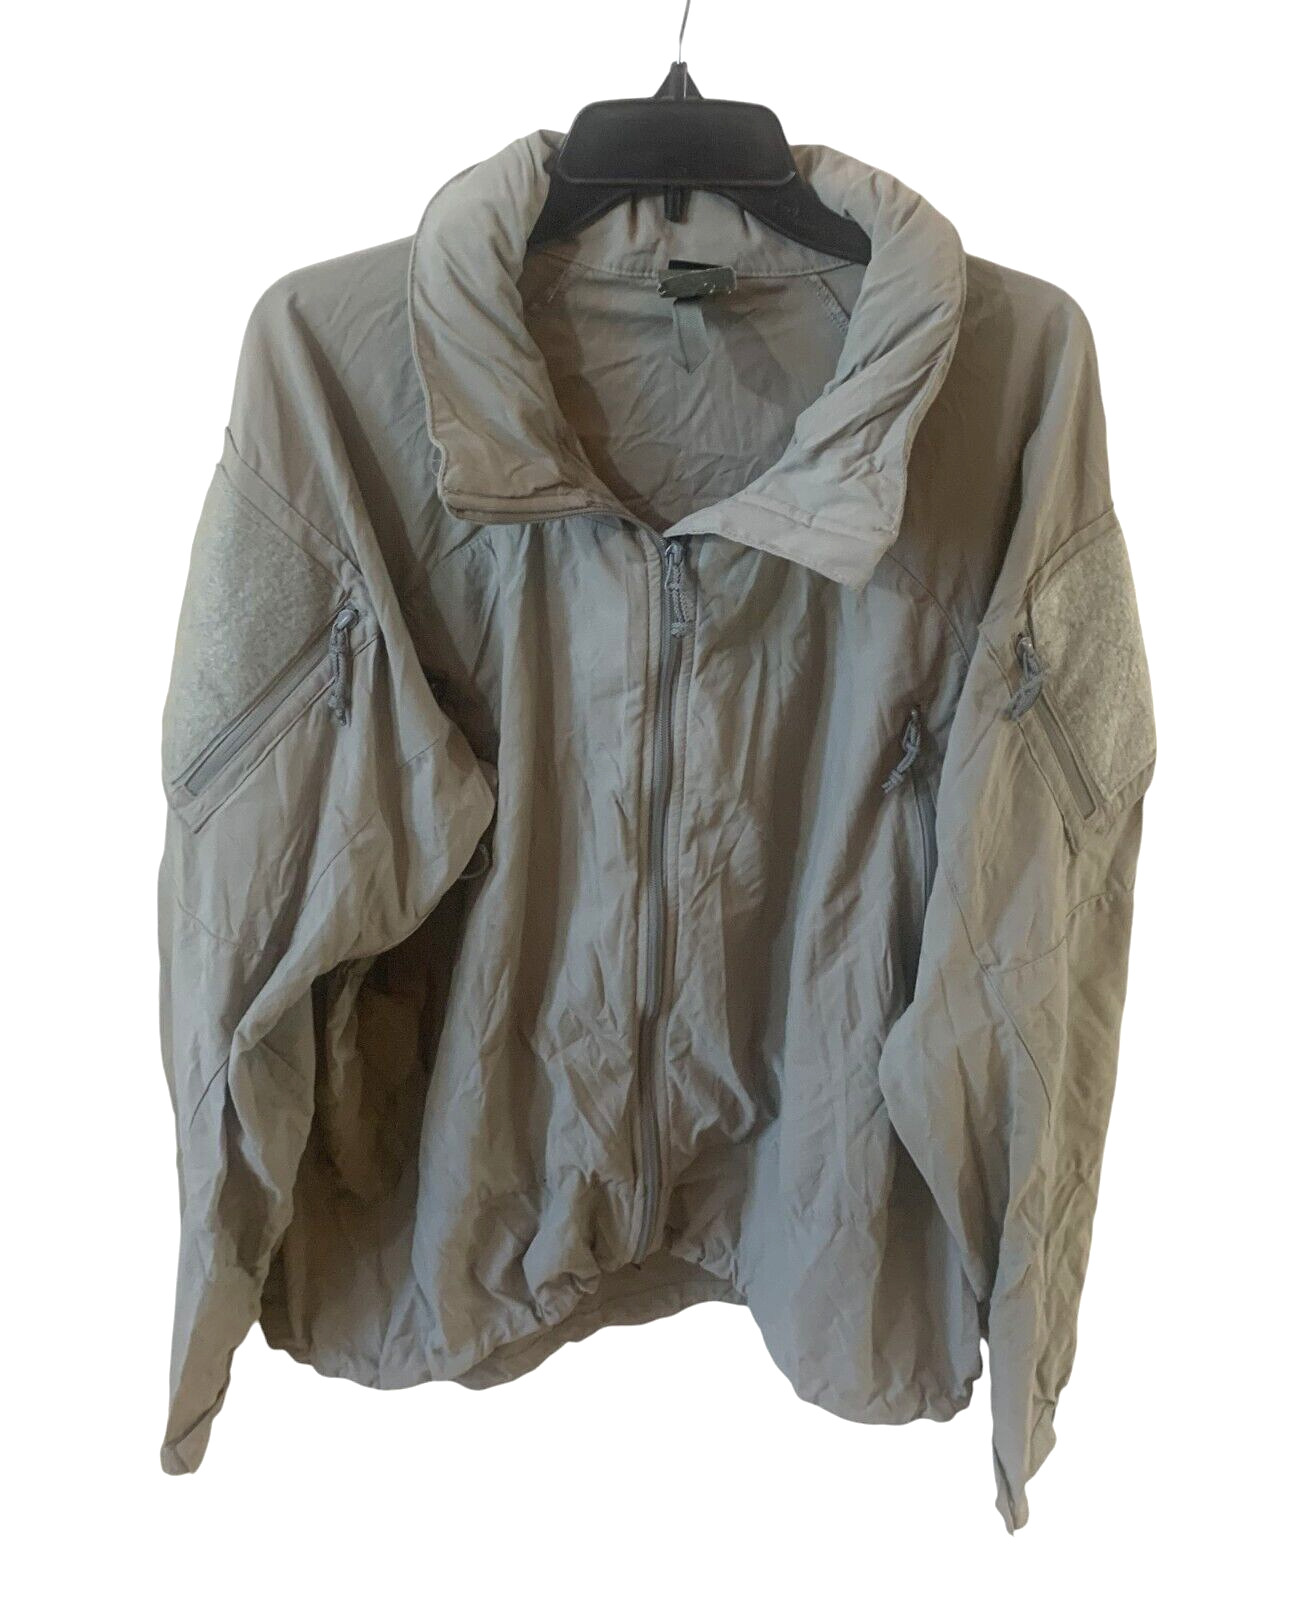 Patagonia PCU Level LVL 5 Jacket Gen II Softshell Coat size Large Regular - READ